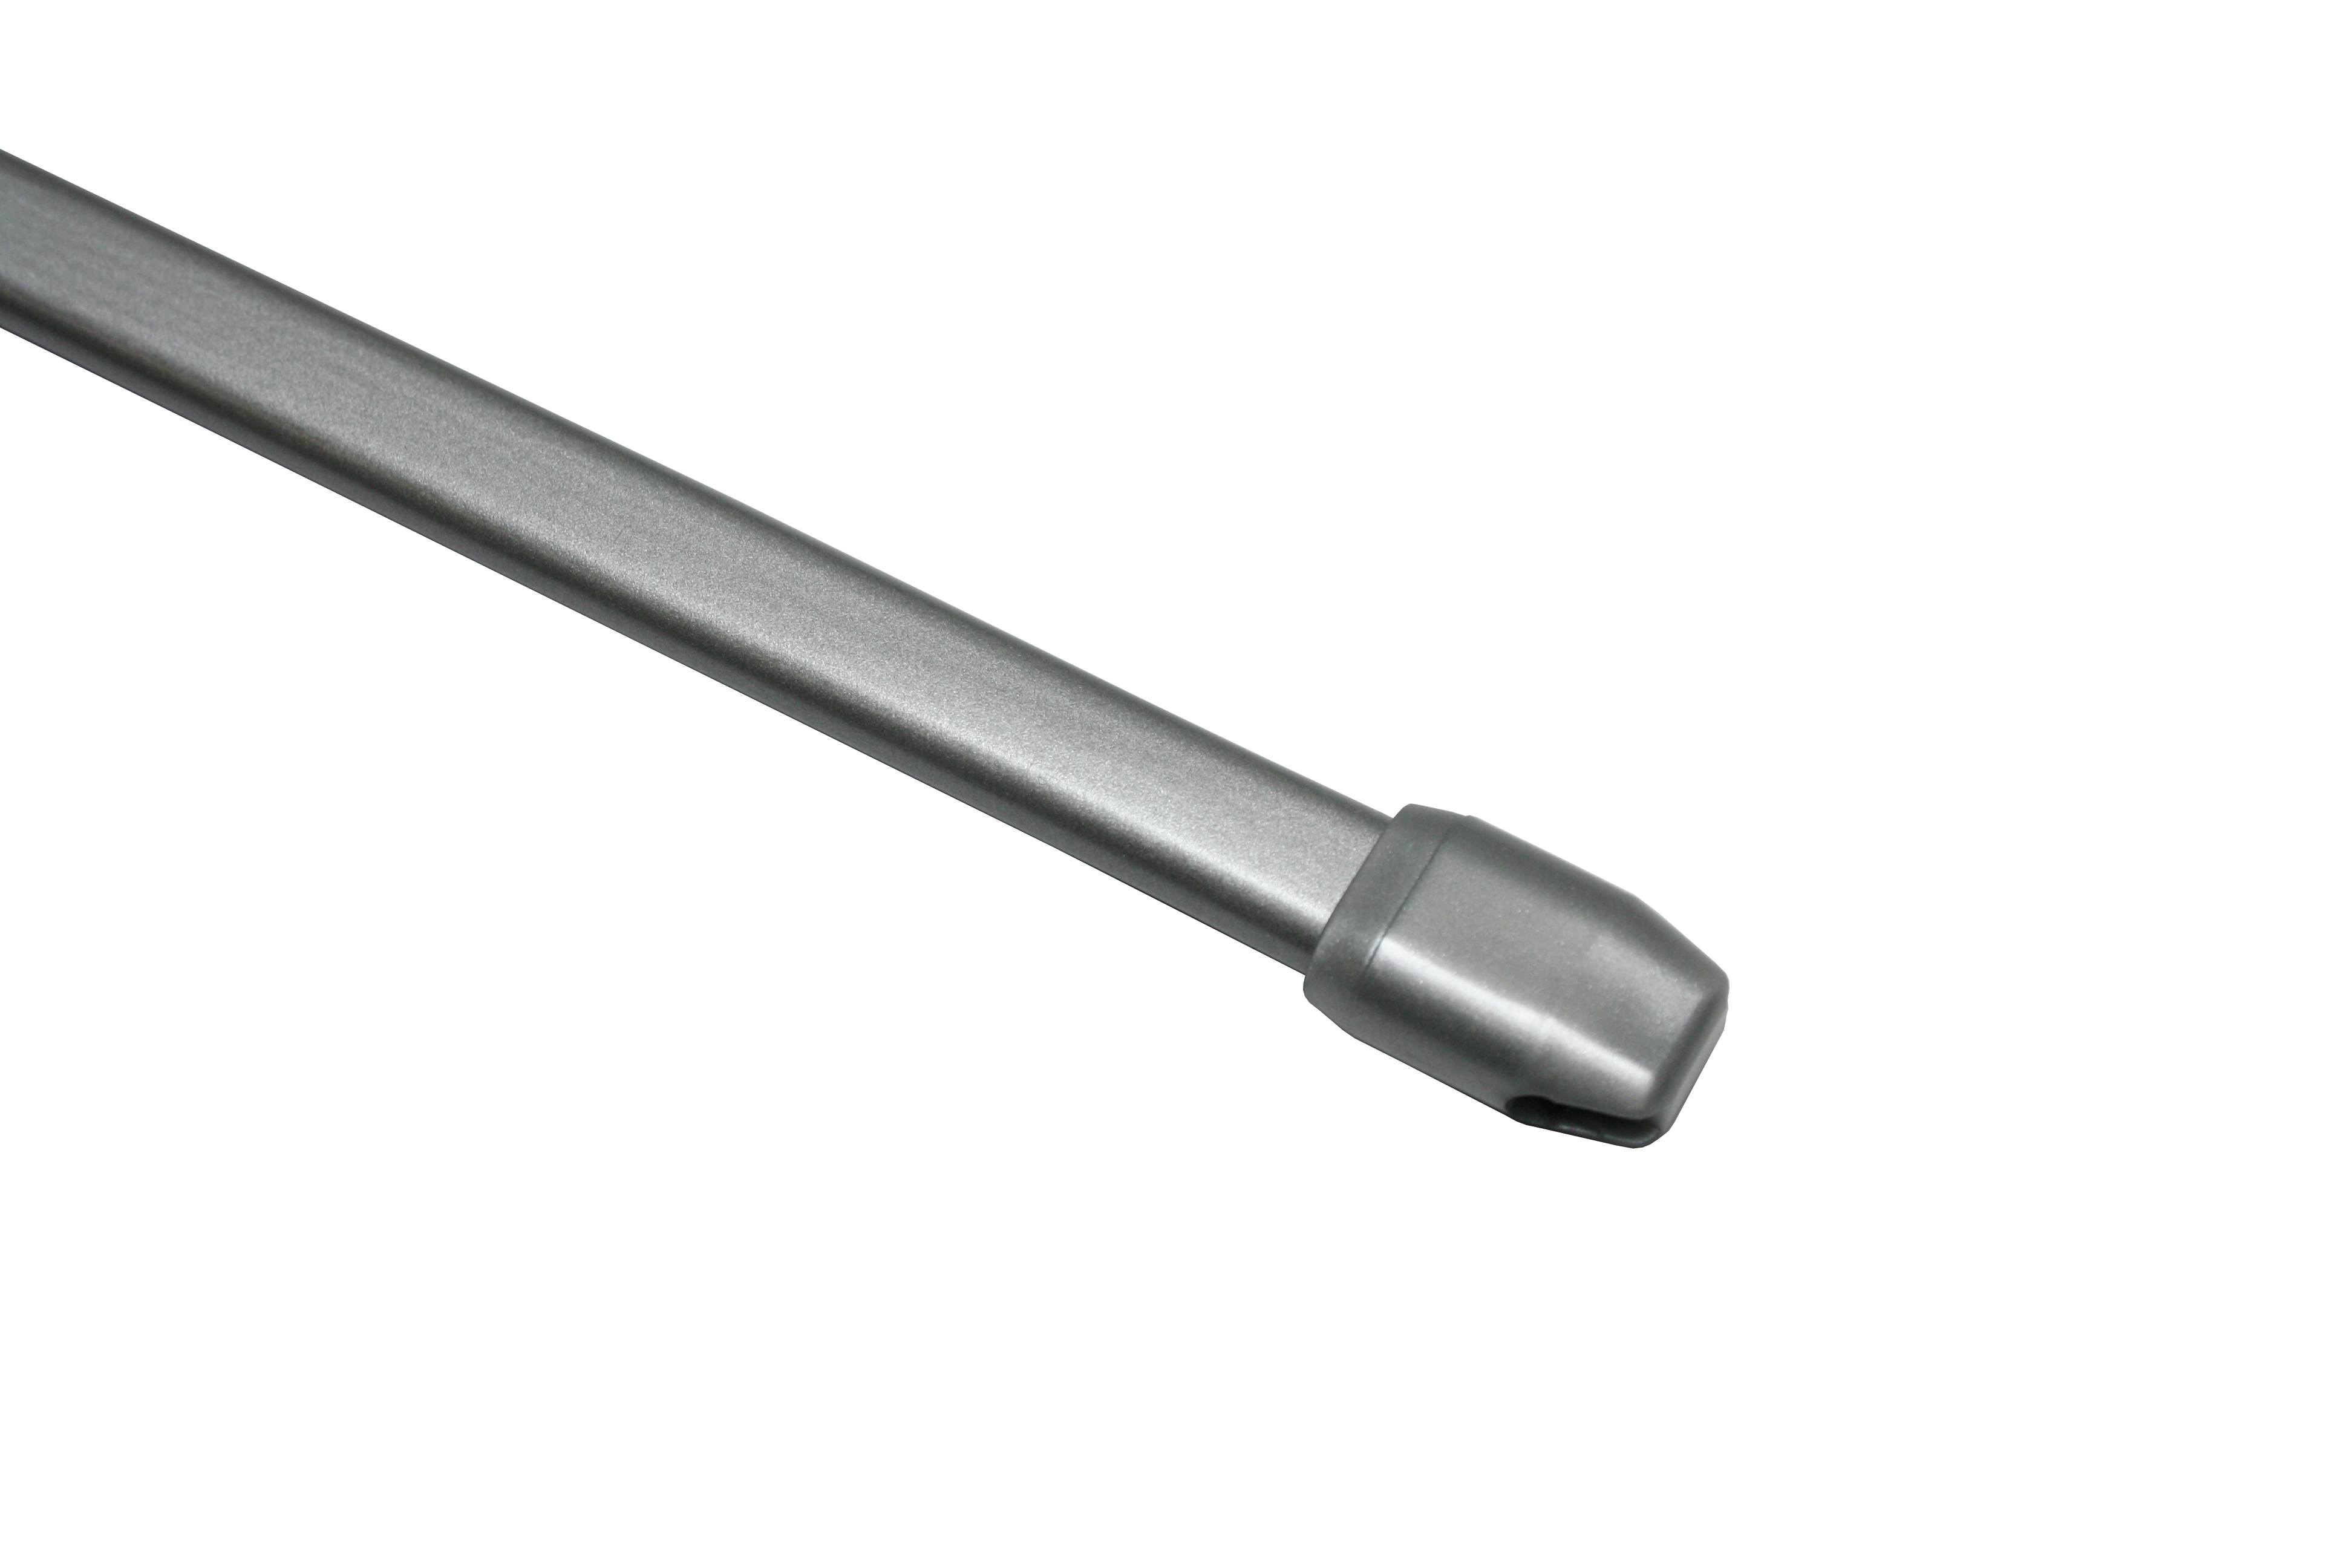 Vitrážní tyčka 11mm, 100-160cm kov/plast, stříbrná matná - 2ks